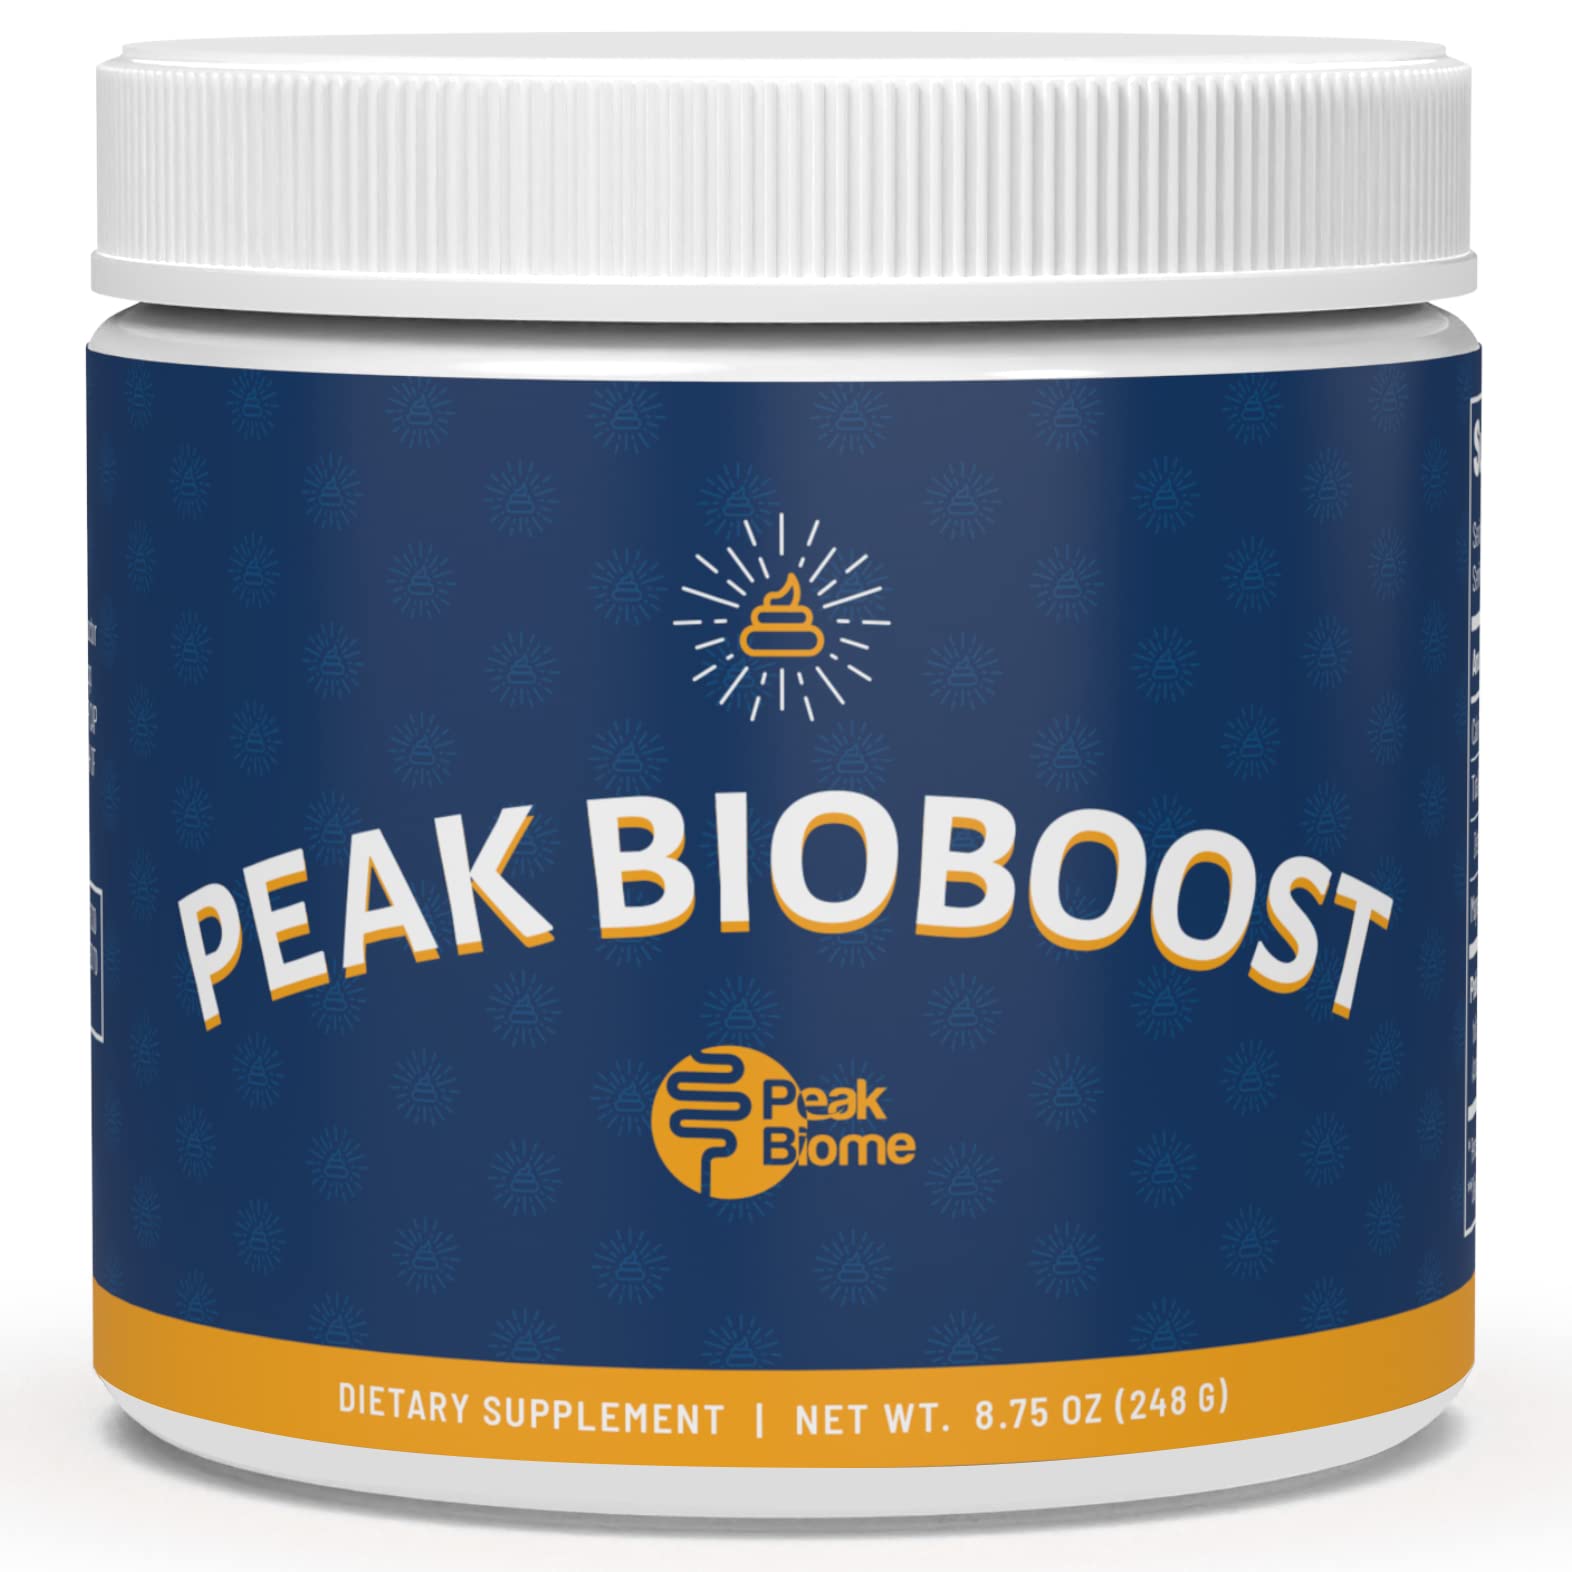 is peak bioboost safe